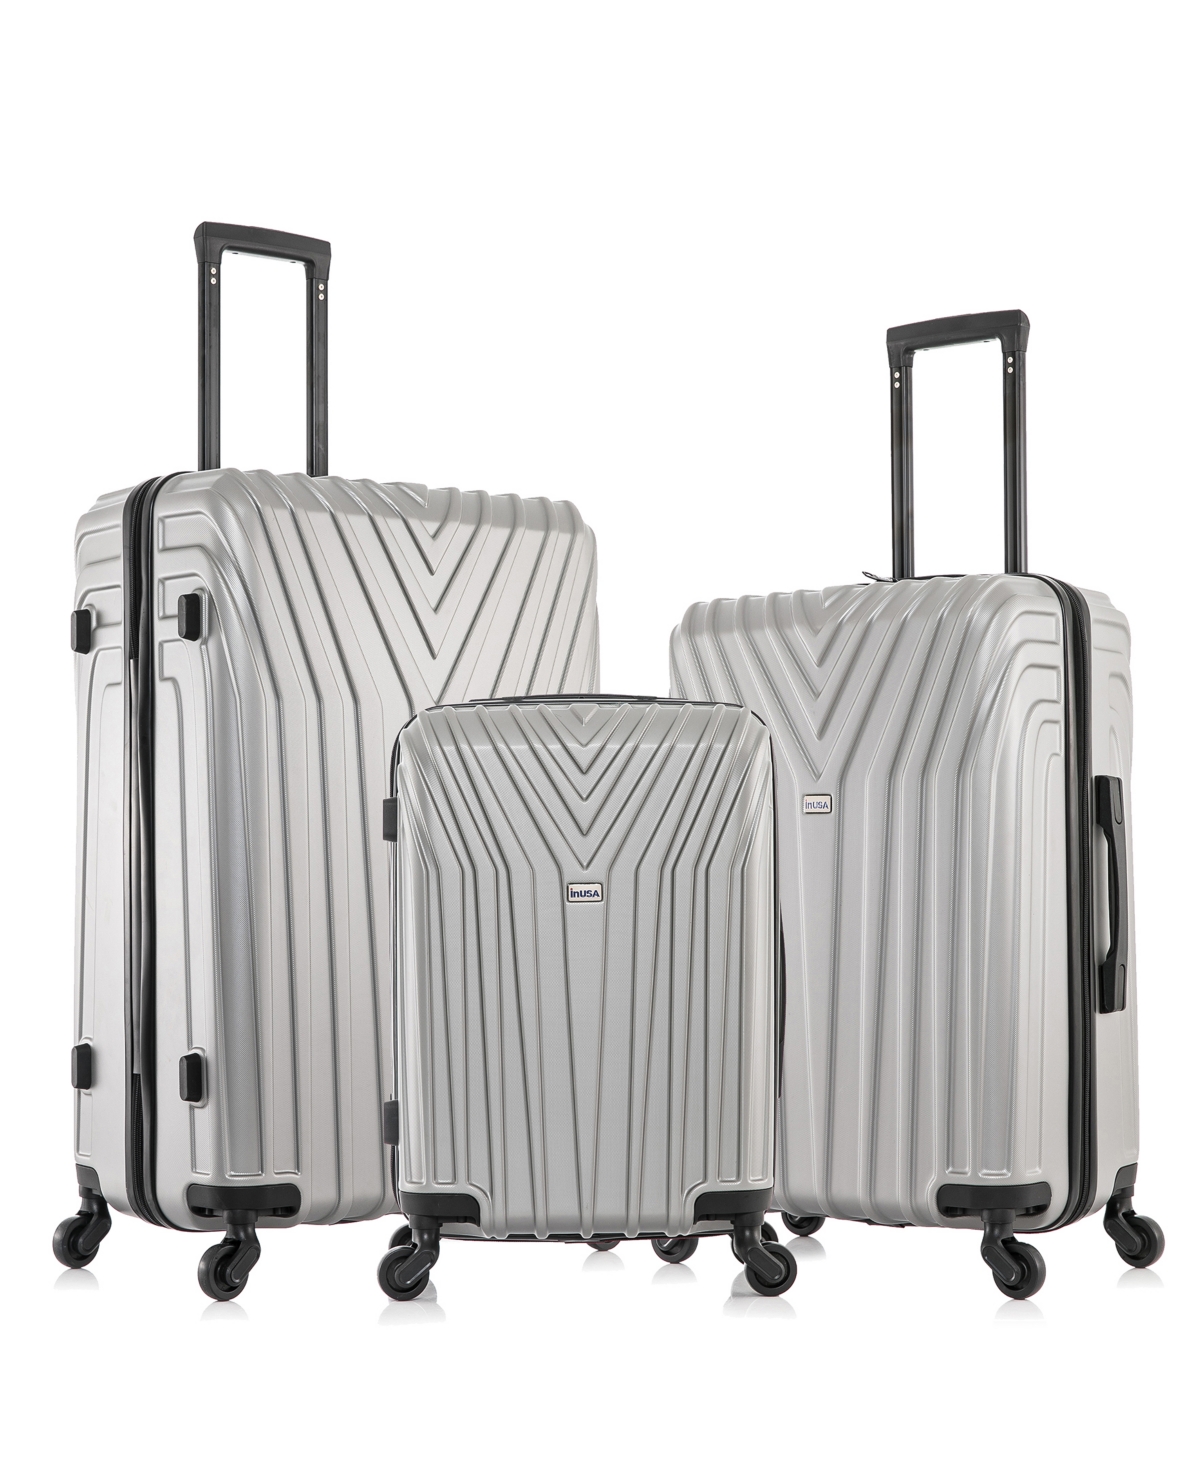 Vasty Lightweight Hardside Spinner Luggage Set, 3 piece - Silver